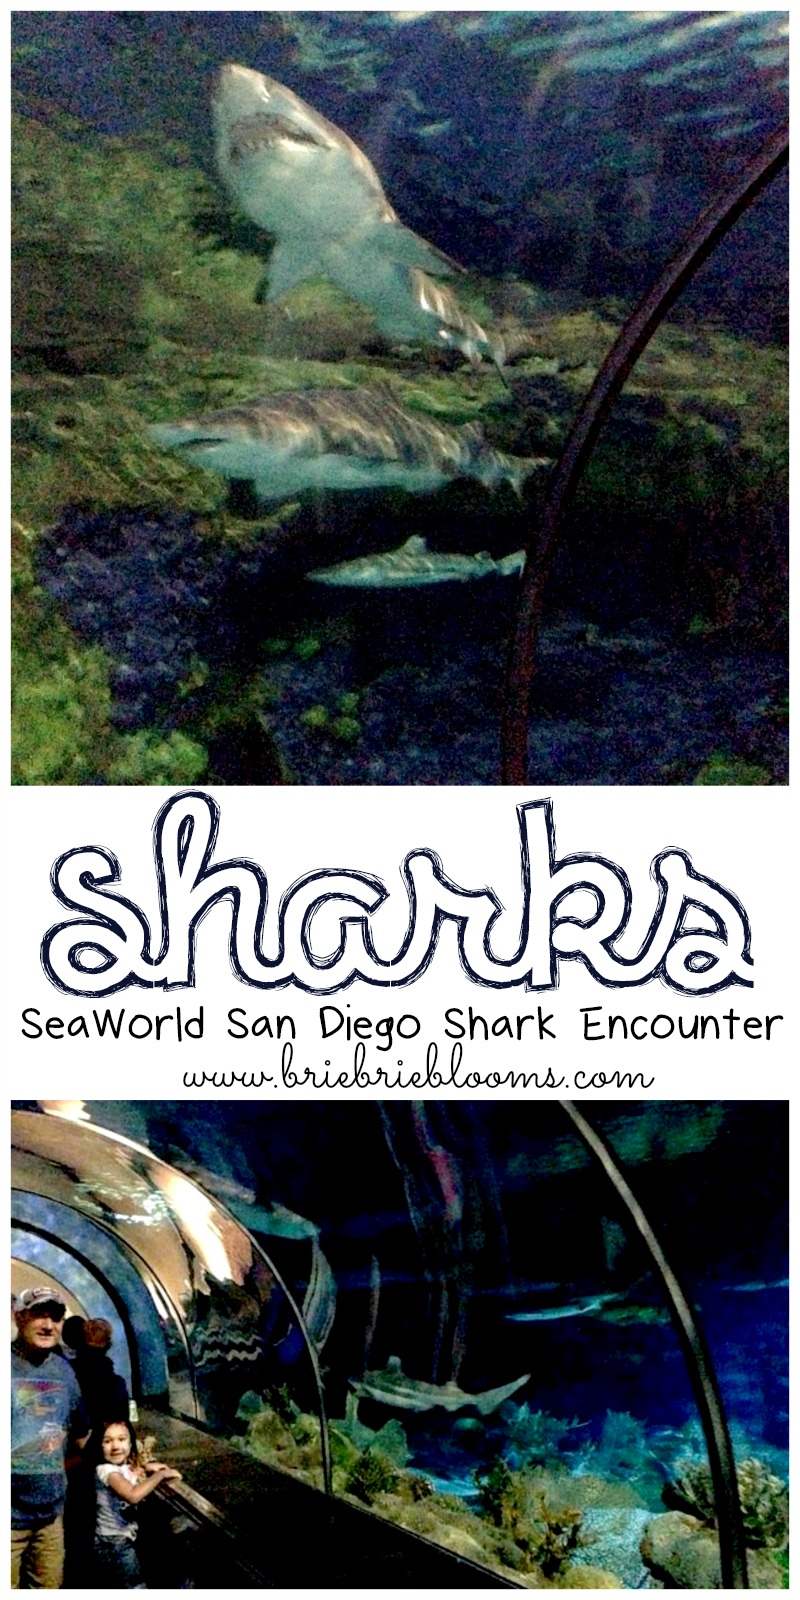 SeaWorld-San-Diego-Shark-Encounter